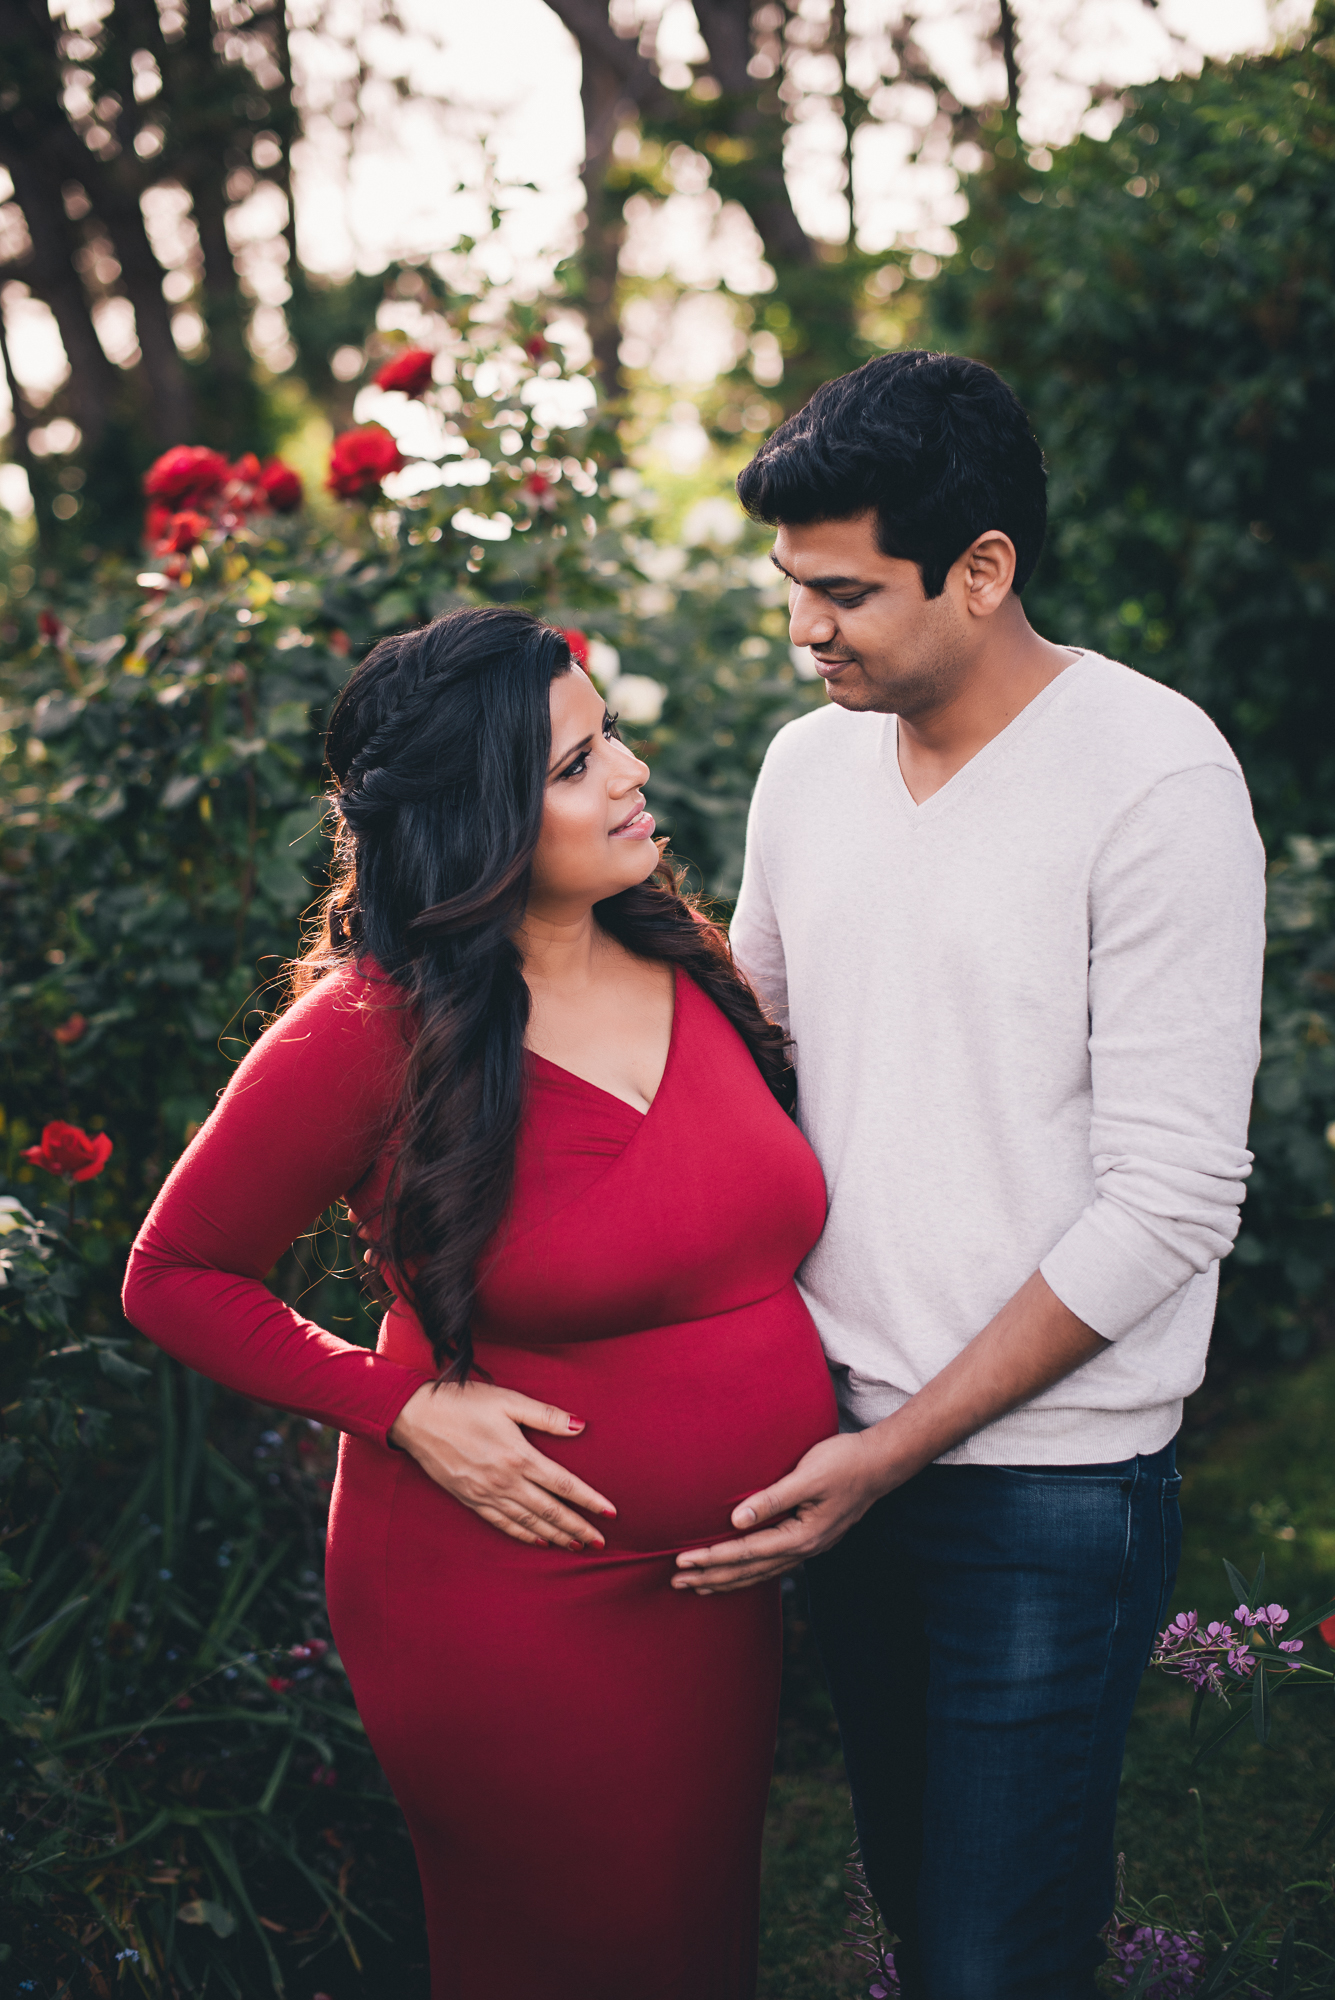 Maternity Photography Amanda Dams Couple Outdoors Photo Session Pregnant Woman